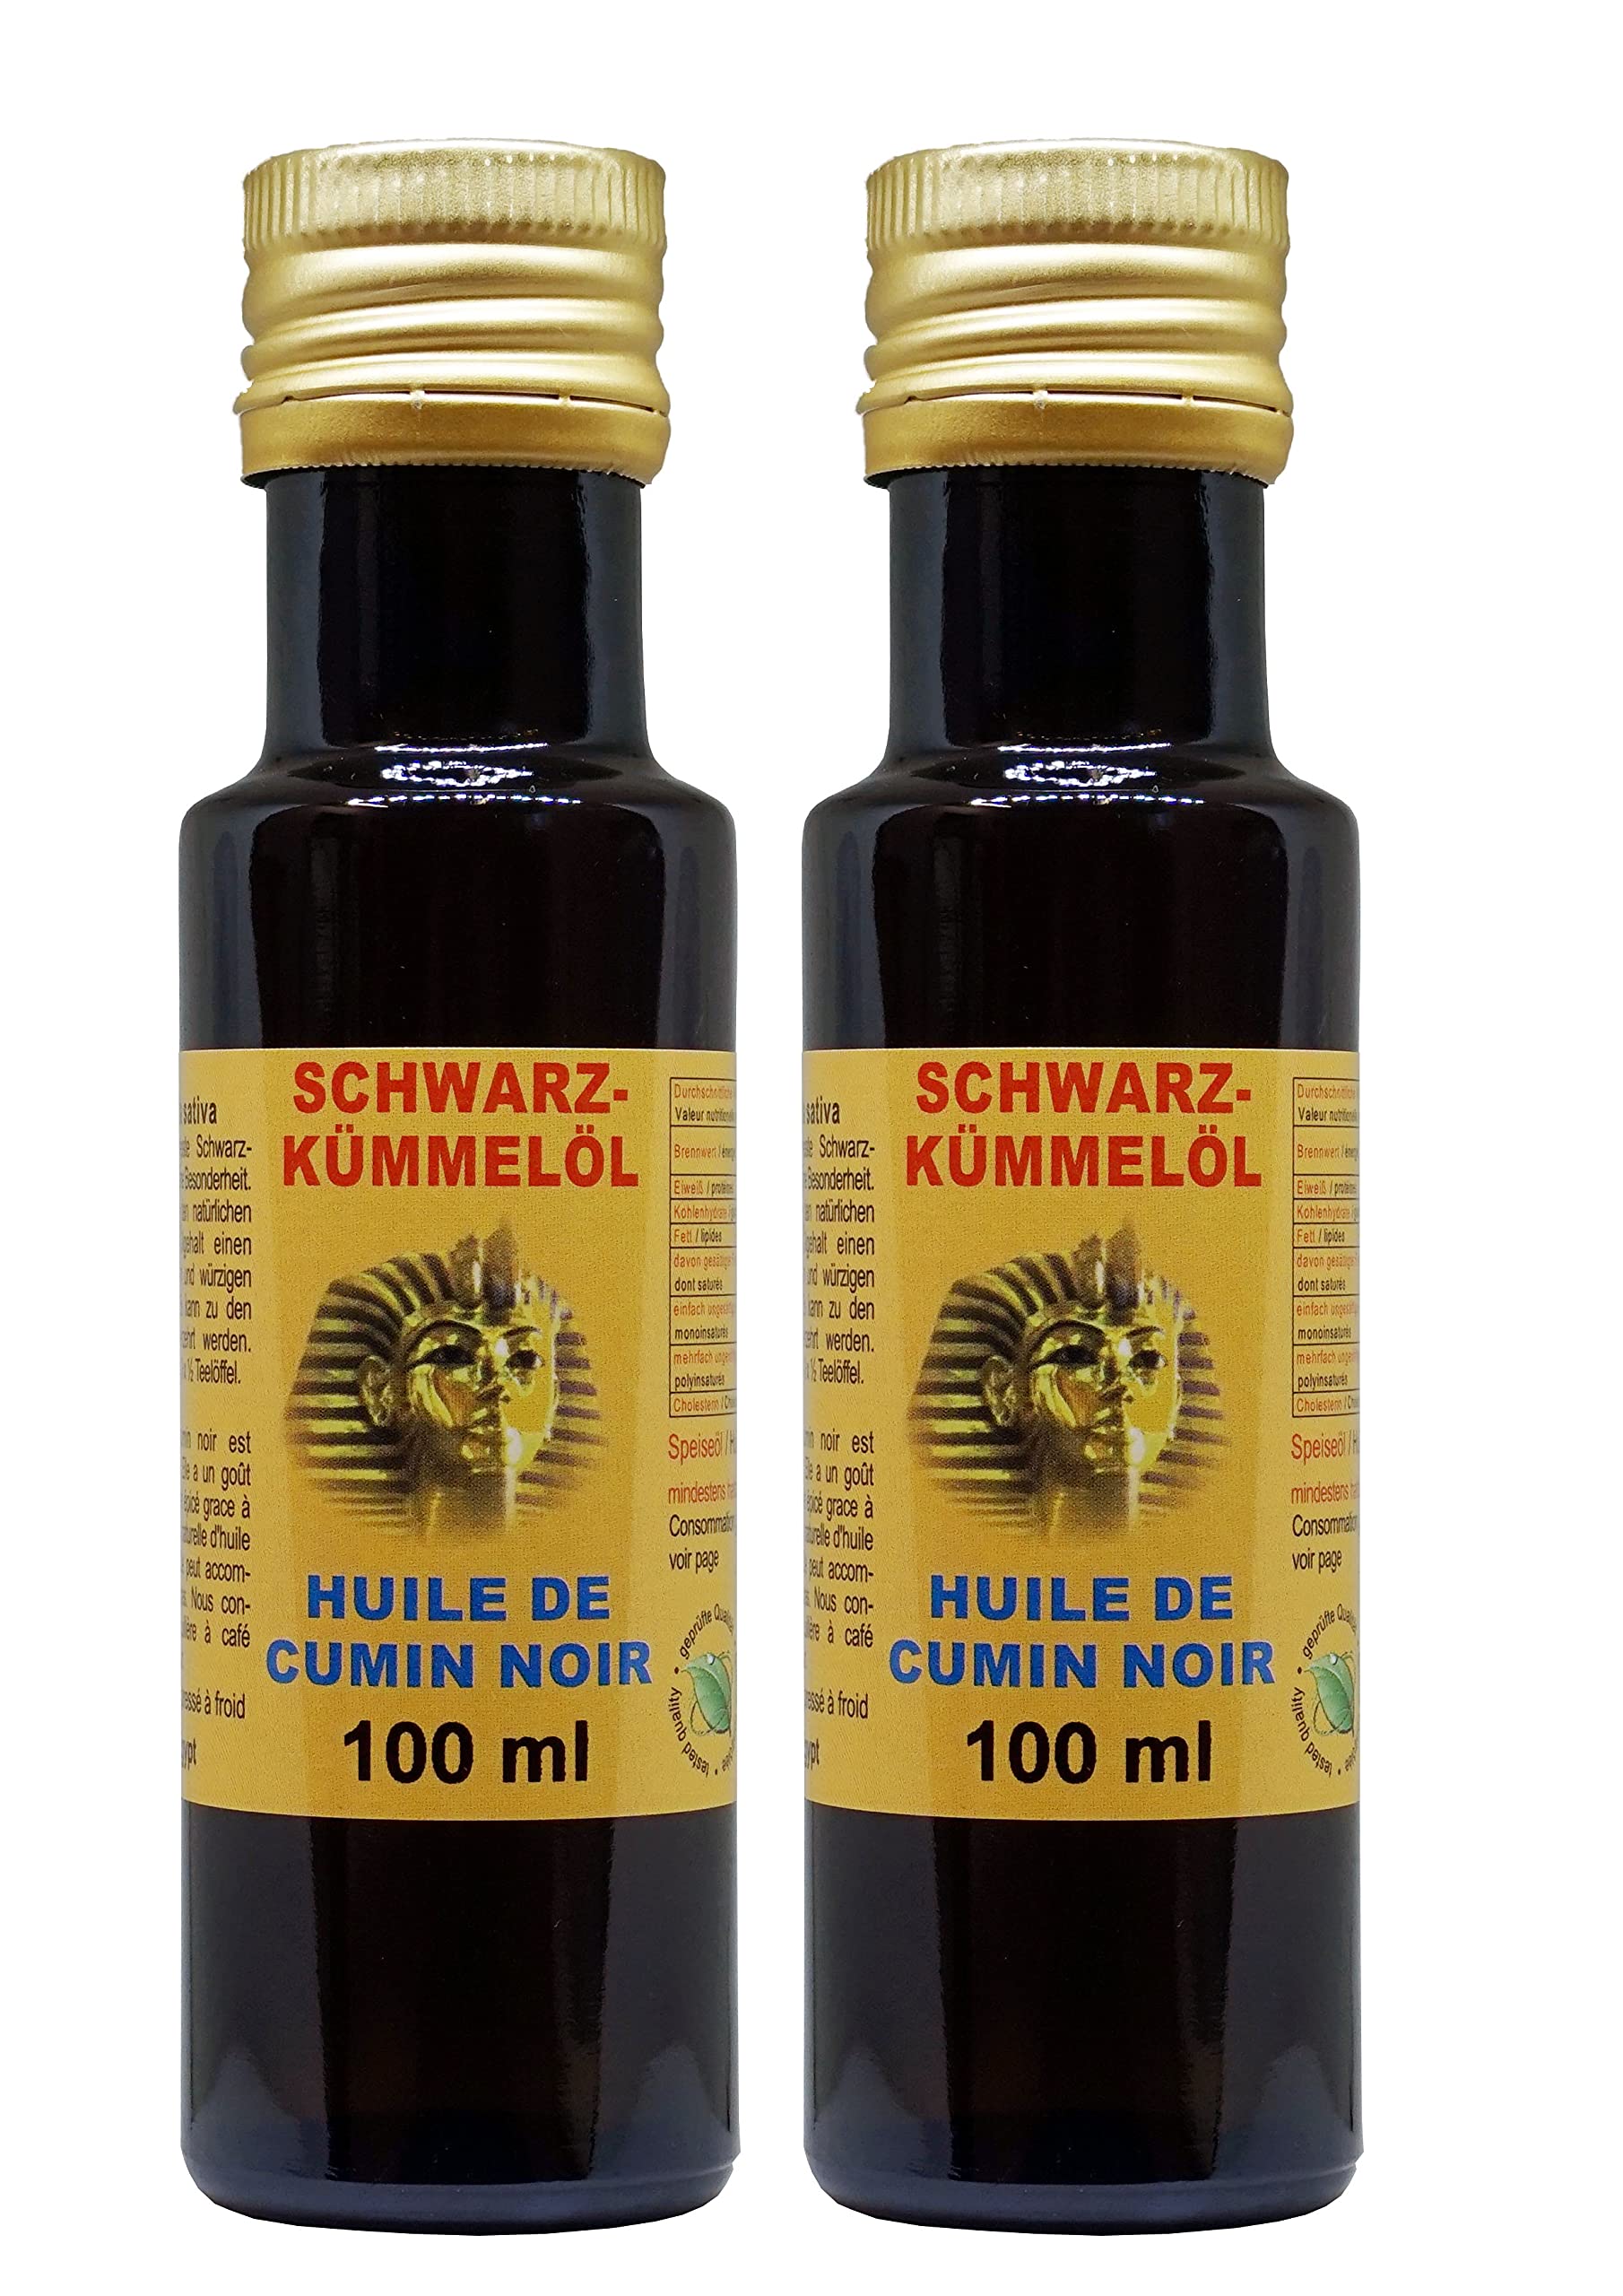 NaturGut Schwarzkümmelöl Kaltgepresst Rein Nigella Sativa Ägypten 2x100ml Pures Schwarzkuemmeloel Ägyptisches Kümmelöl